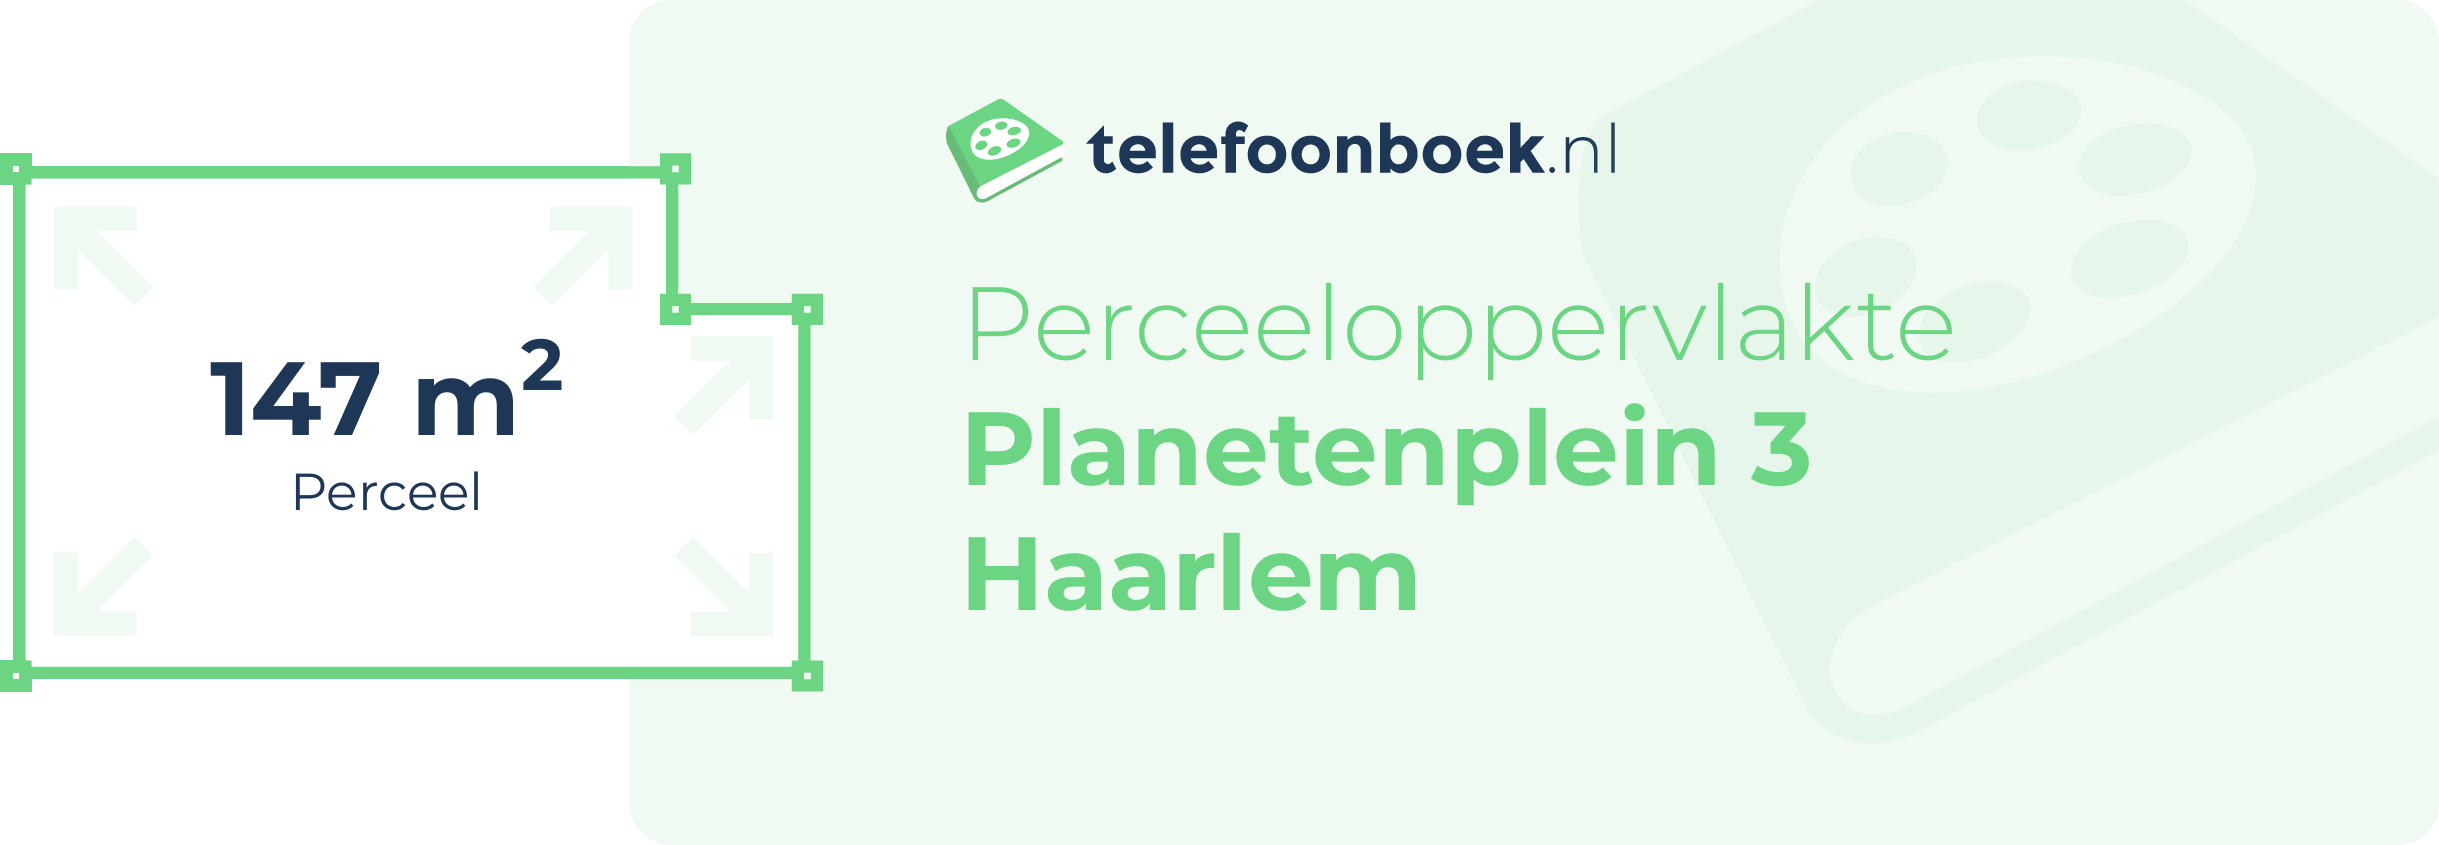 Perceeloppervlakte Planetenplein 3 Haarlem